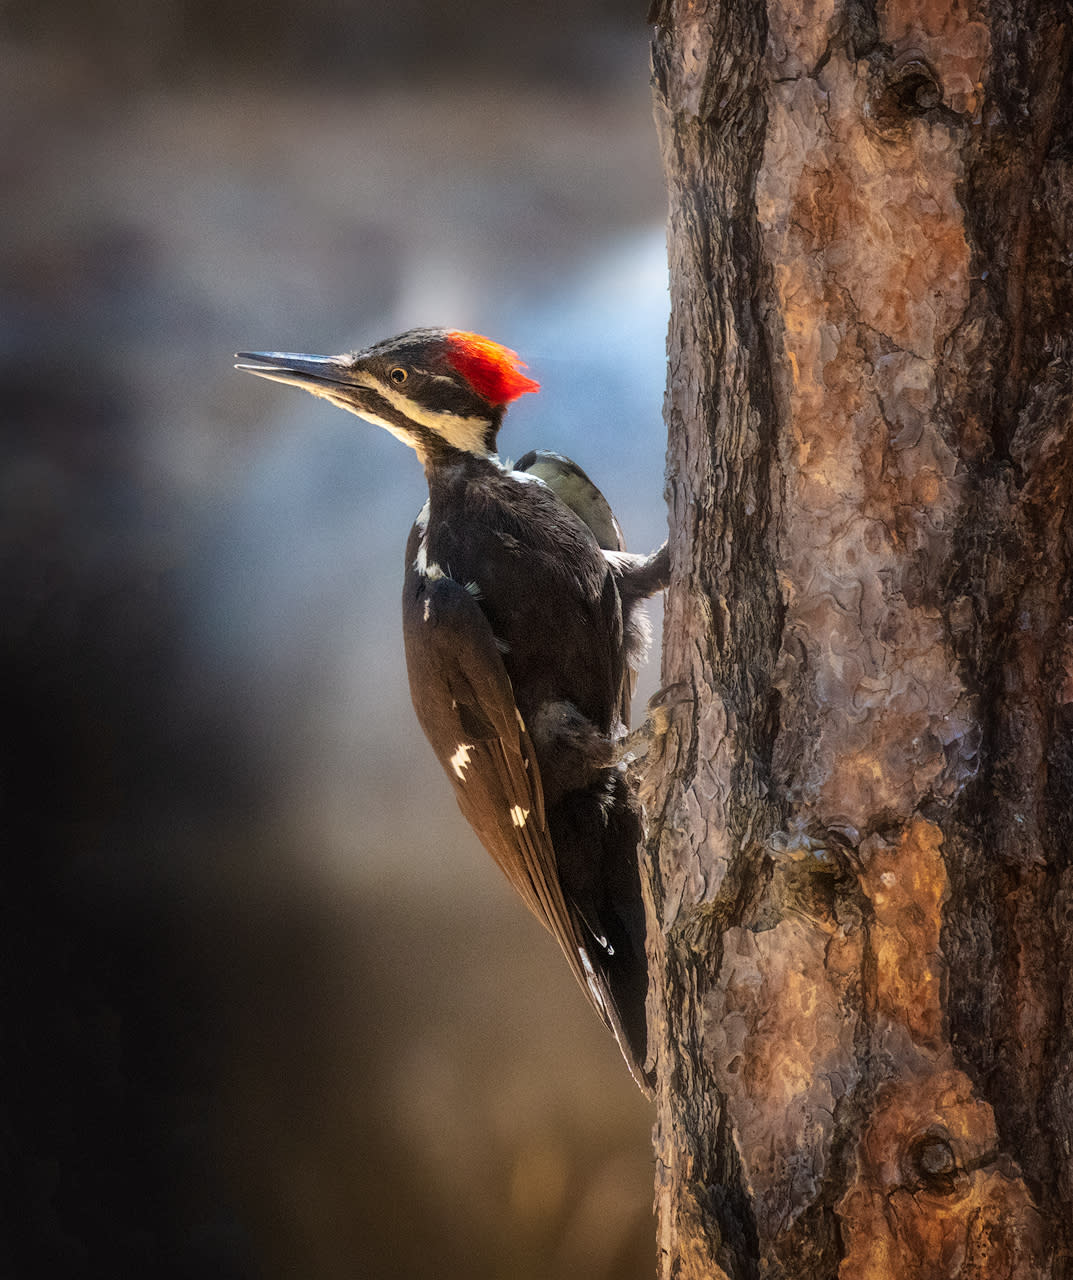 Pileated woodpecker iuwzno